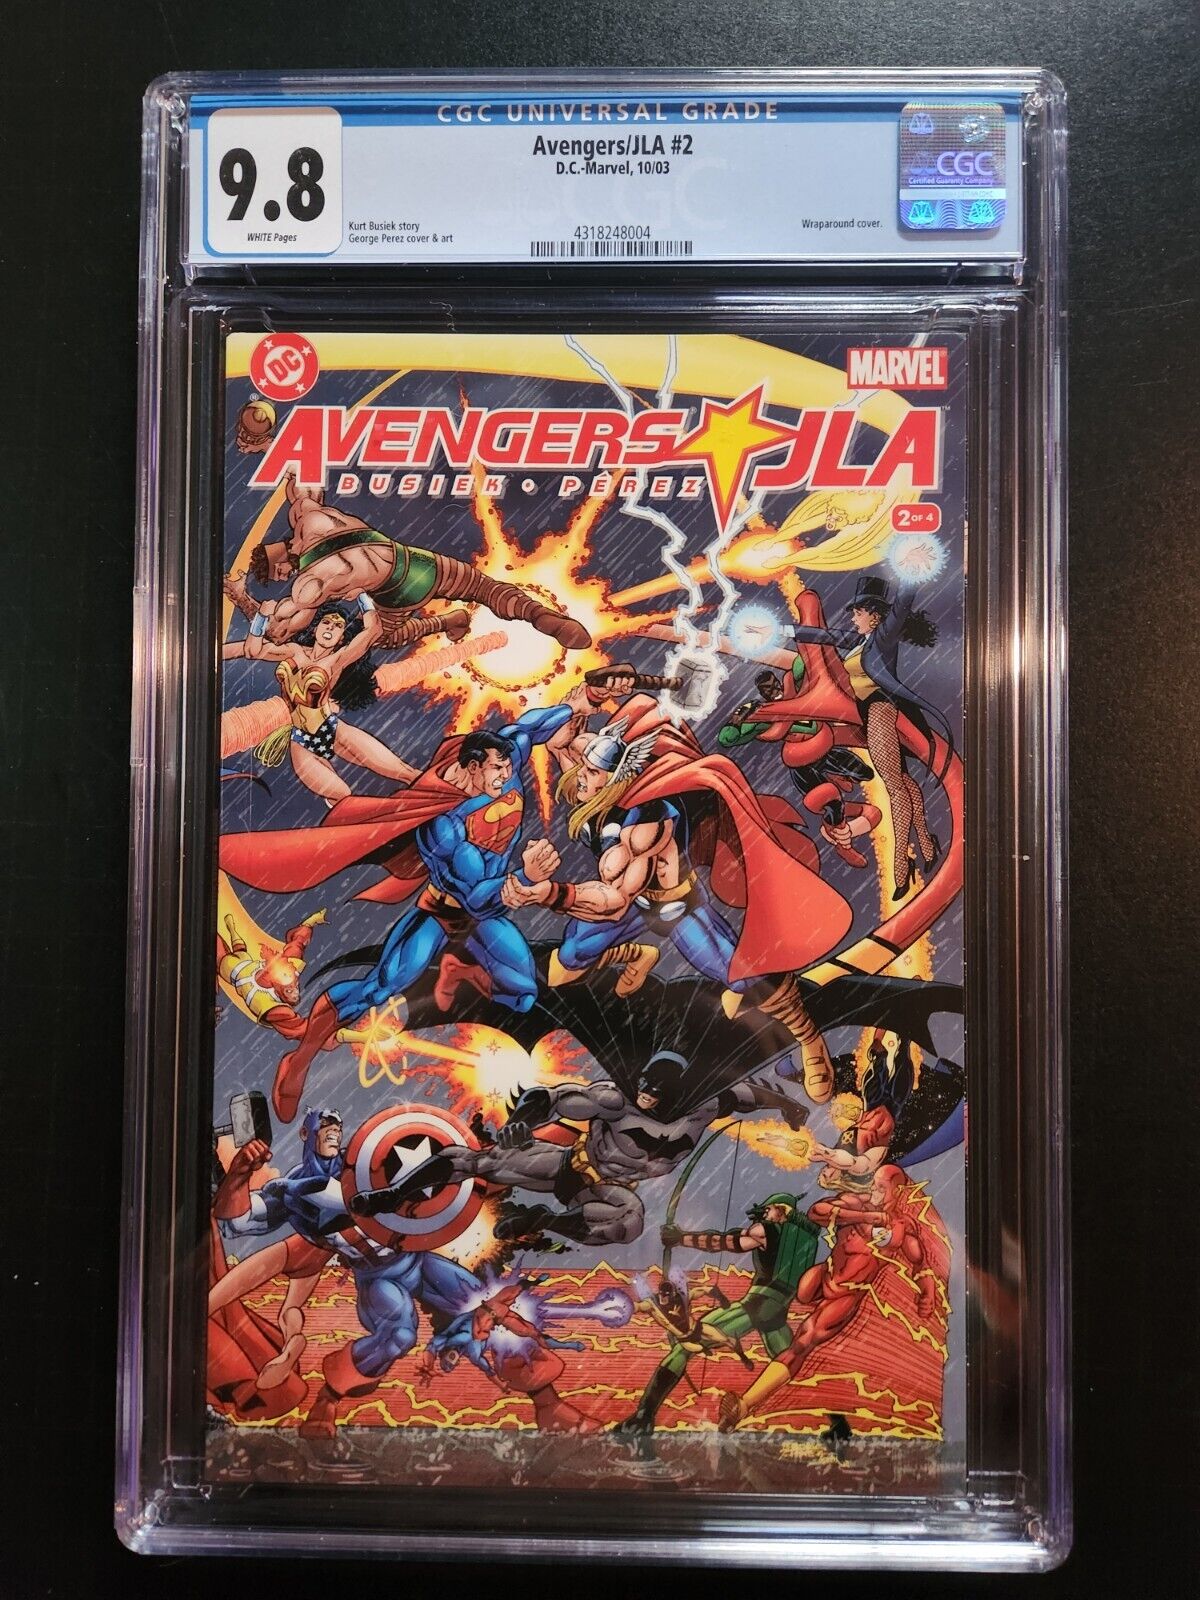 Avengers/JLA #2 DC-Marvel 10/03 CGC Grade 9.8 George Perez Cover